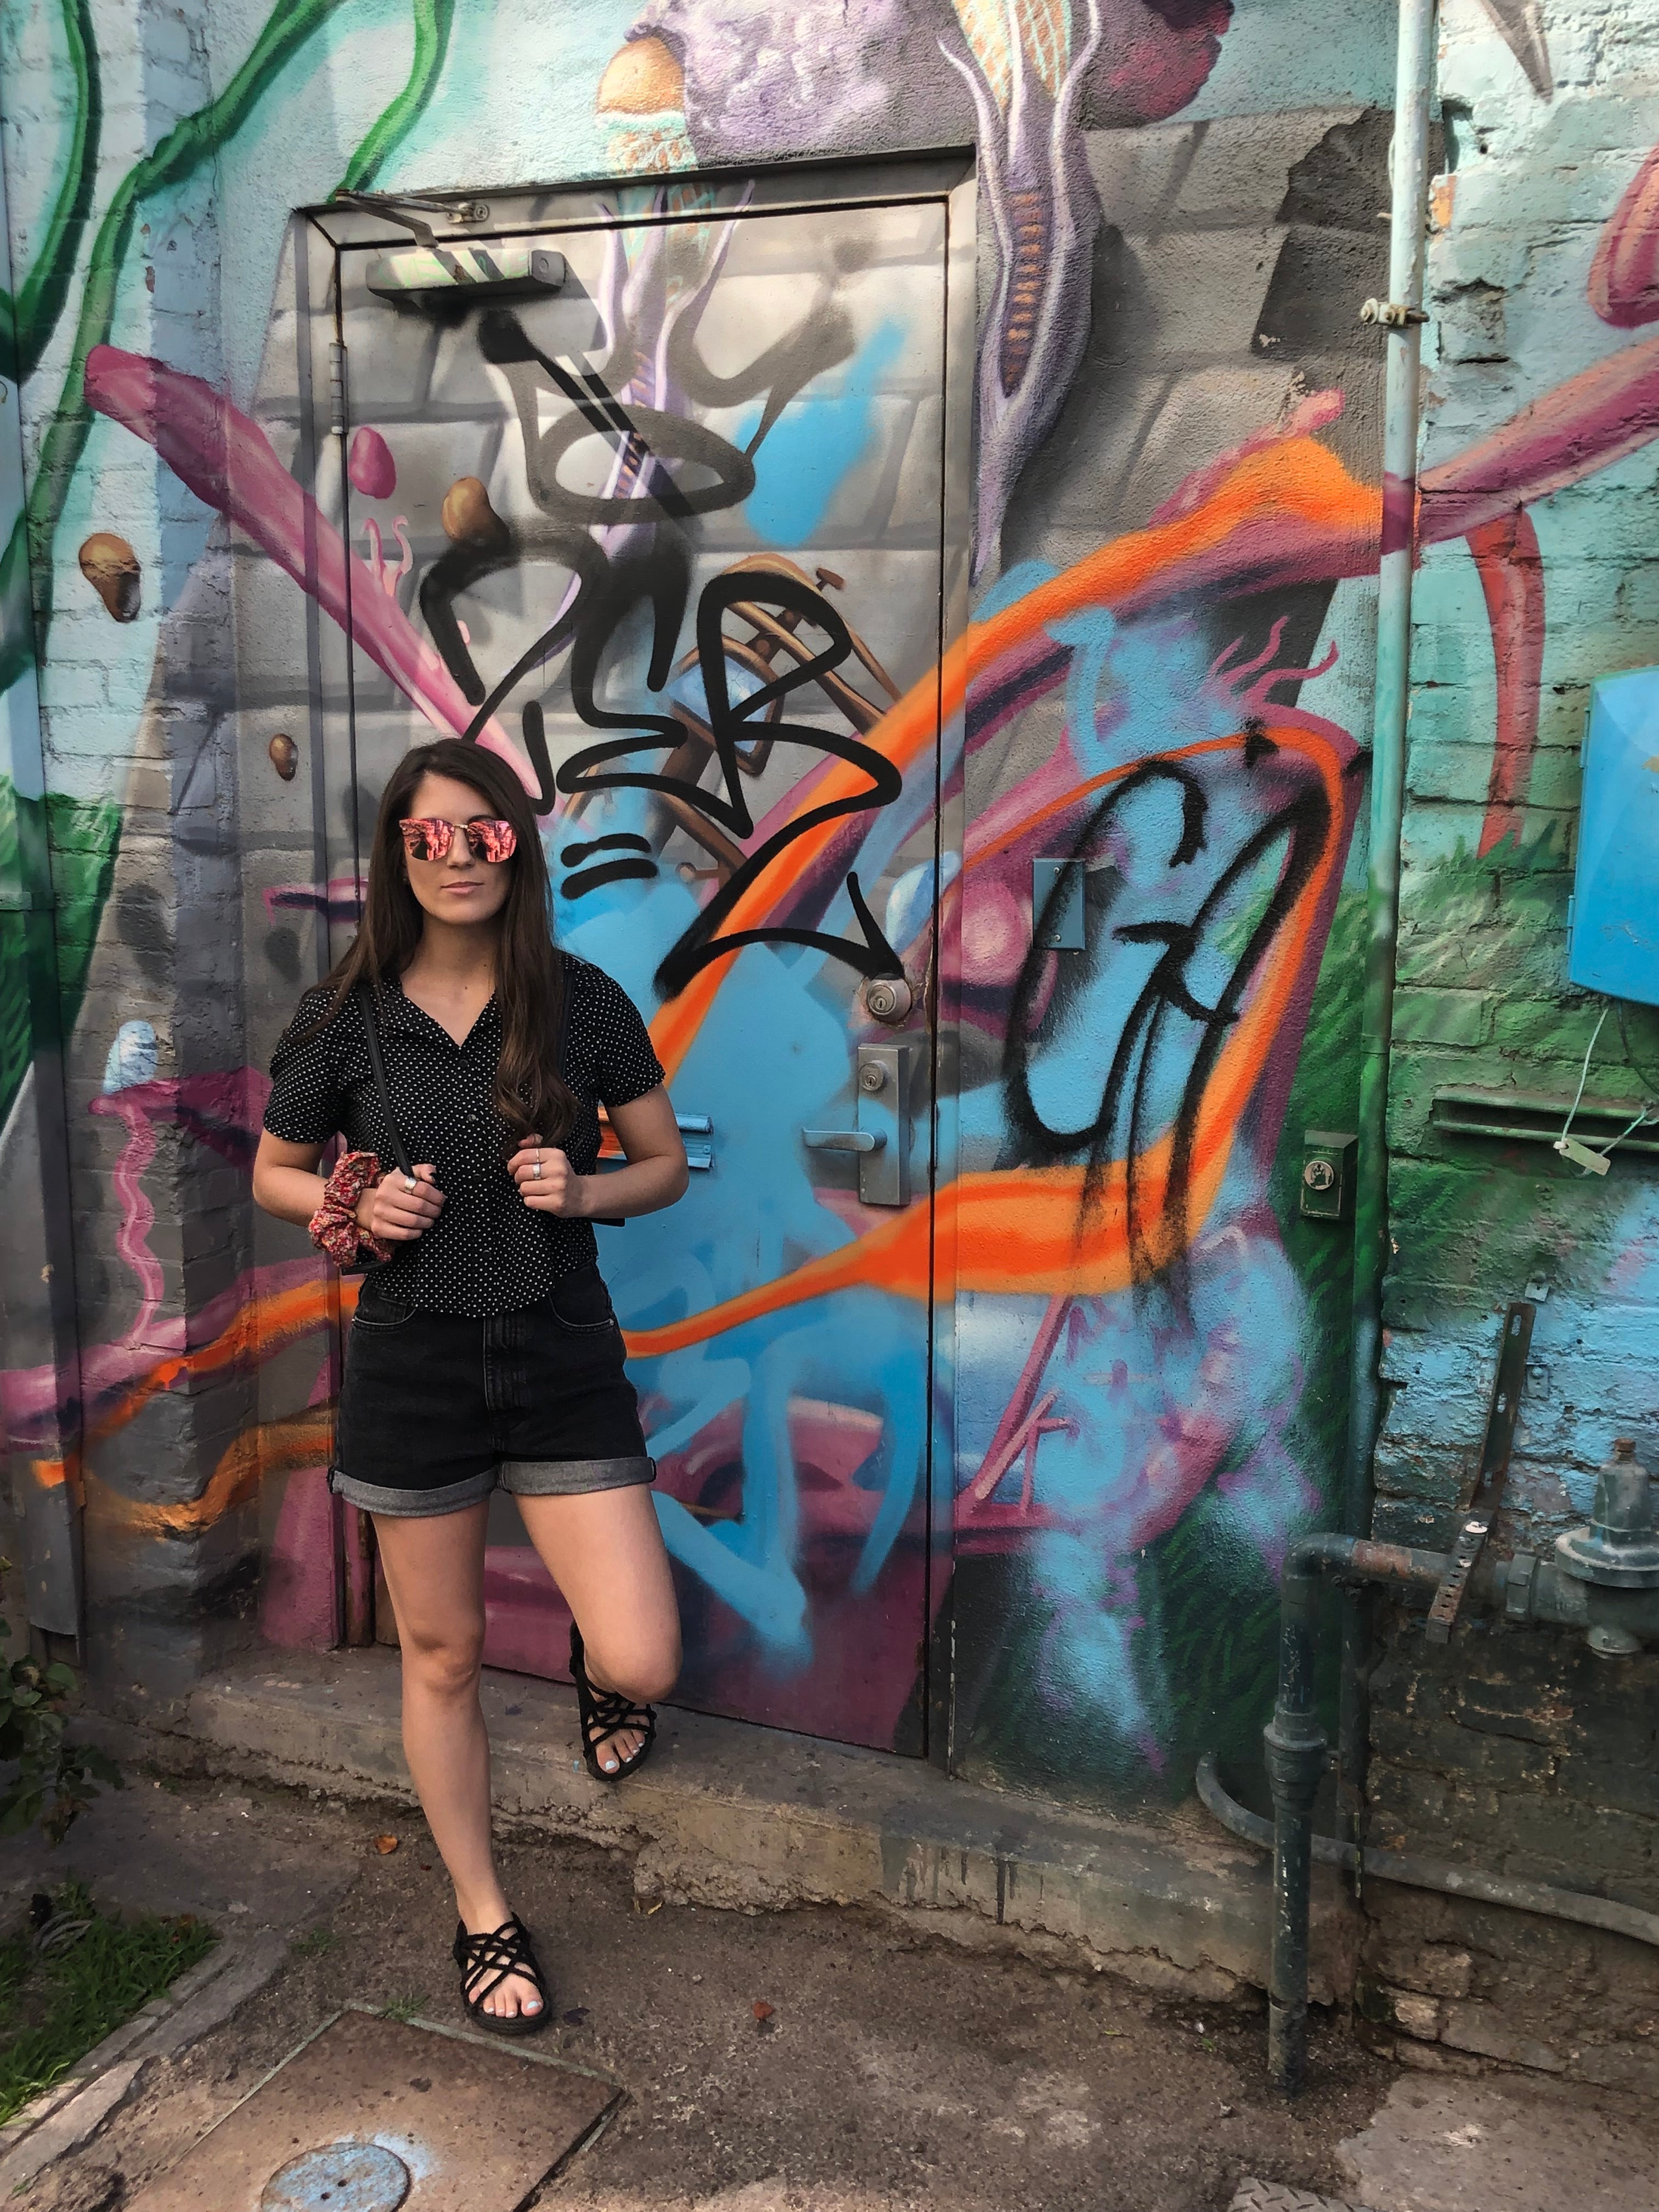 modeling in sandals beside a graffiti wall